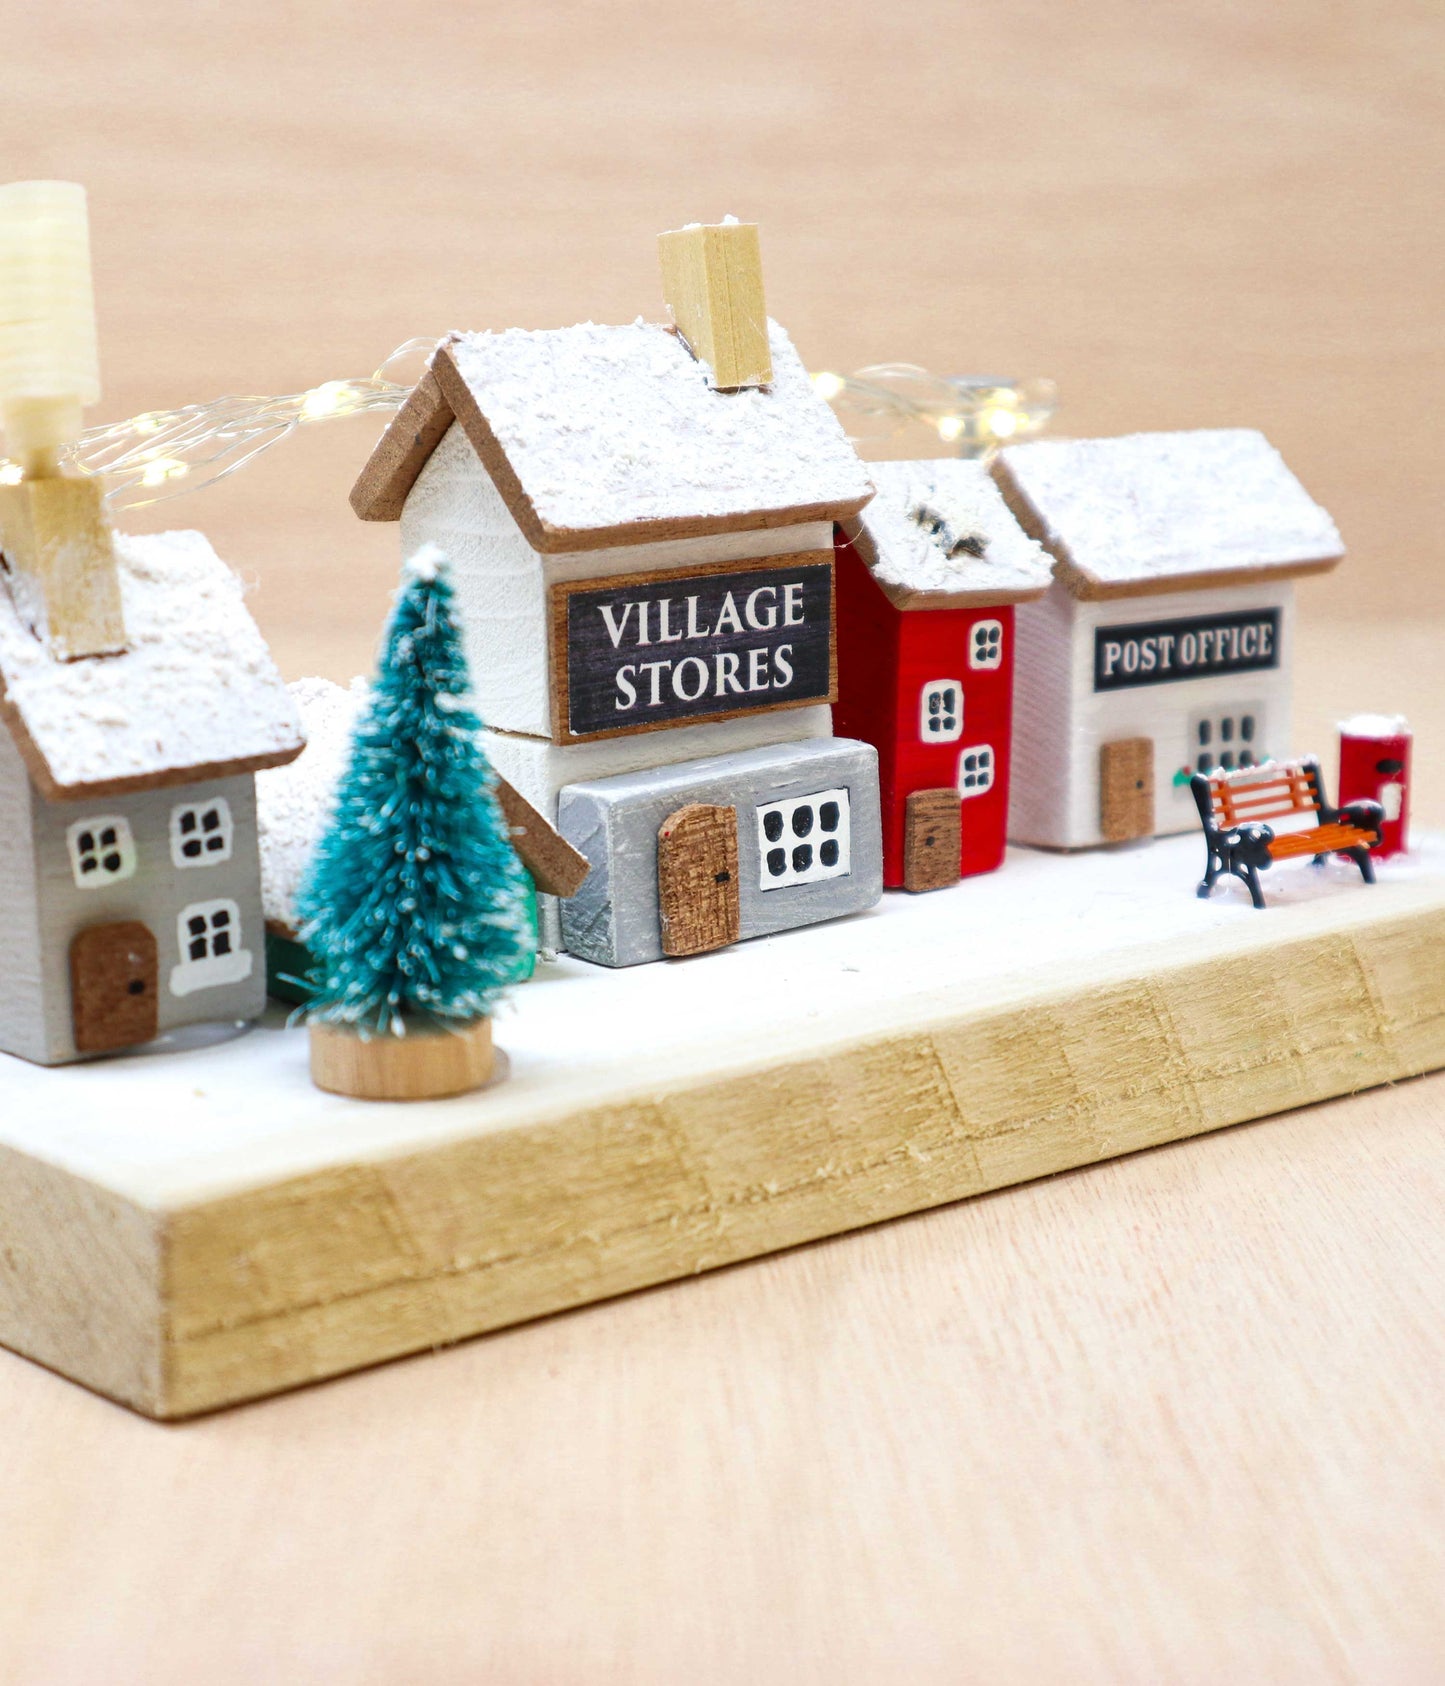 Make a Miniature Village